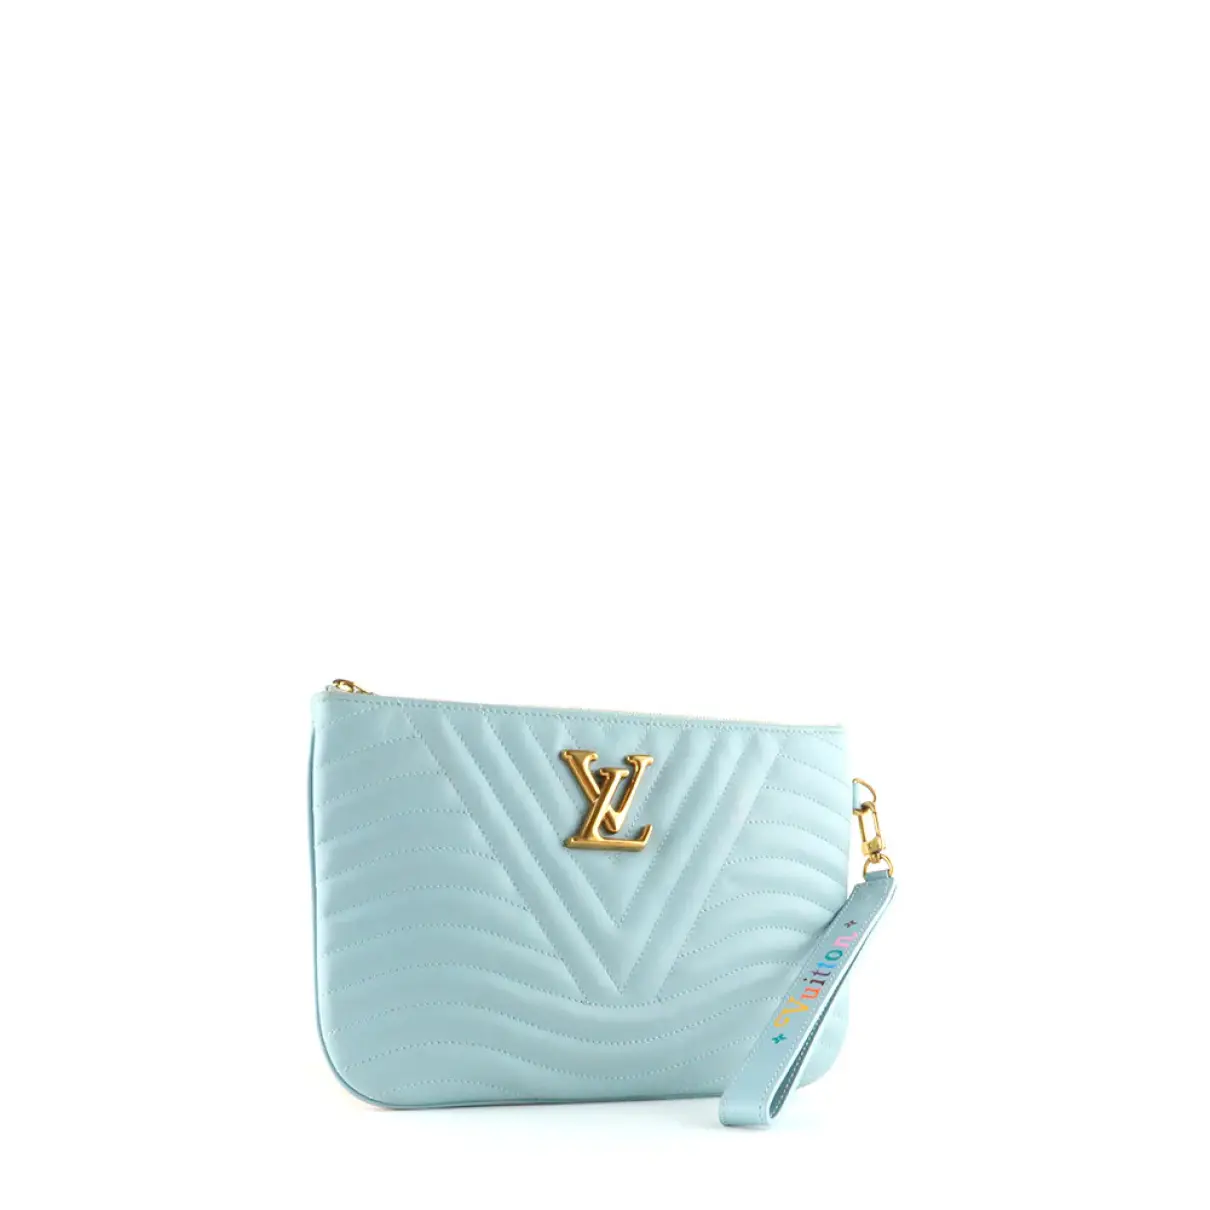 Buy Louis Vuitton Capucines leather clutch bag online